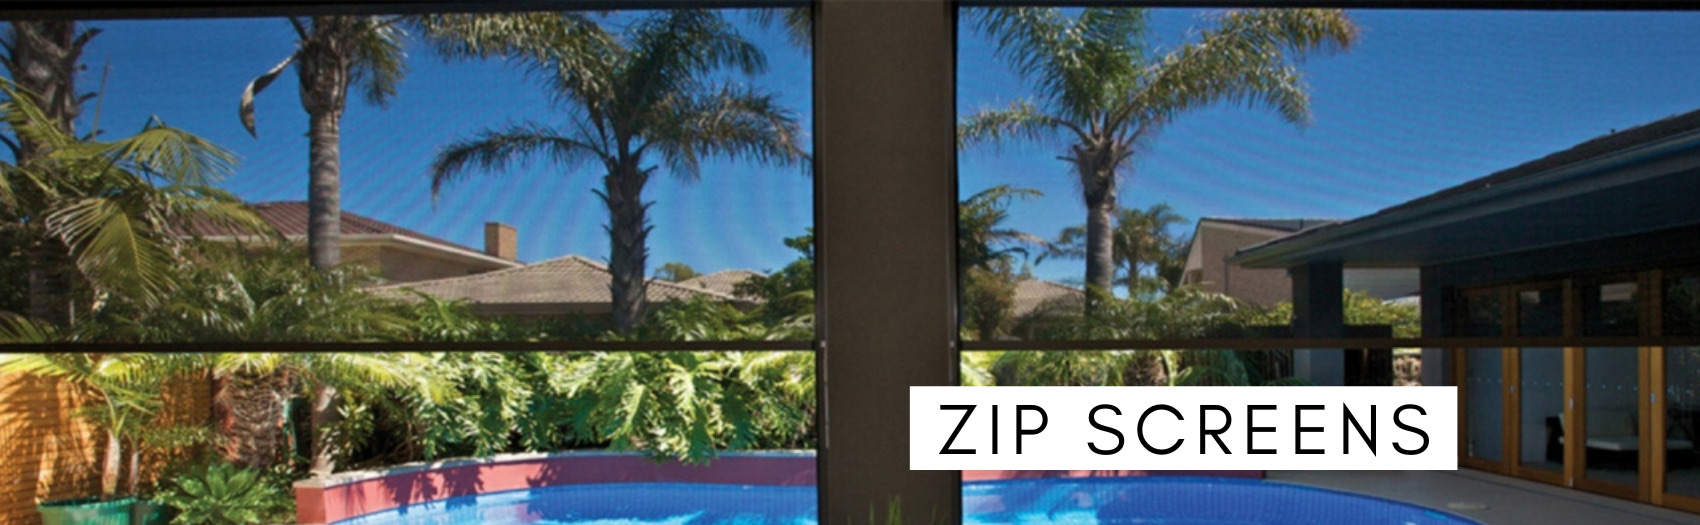 zip screens brisbane decor blinds